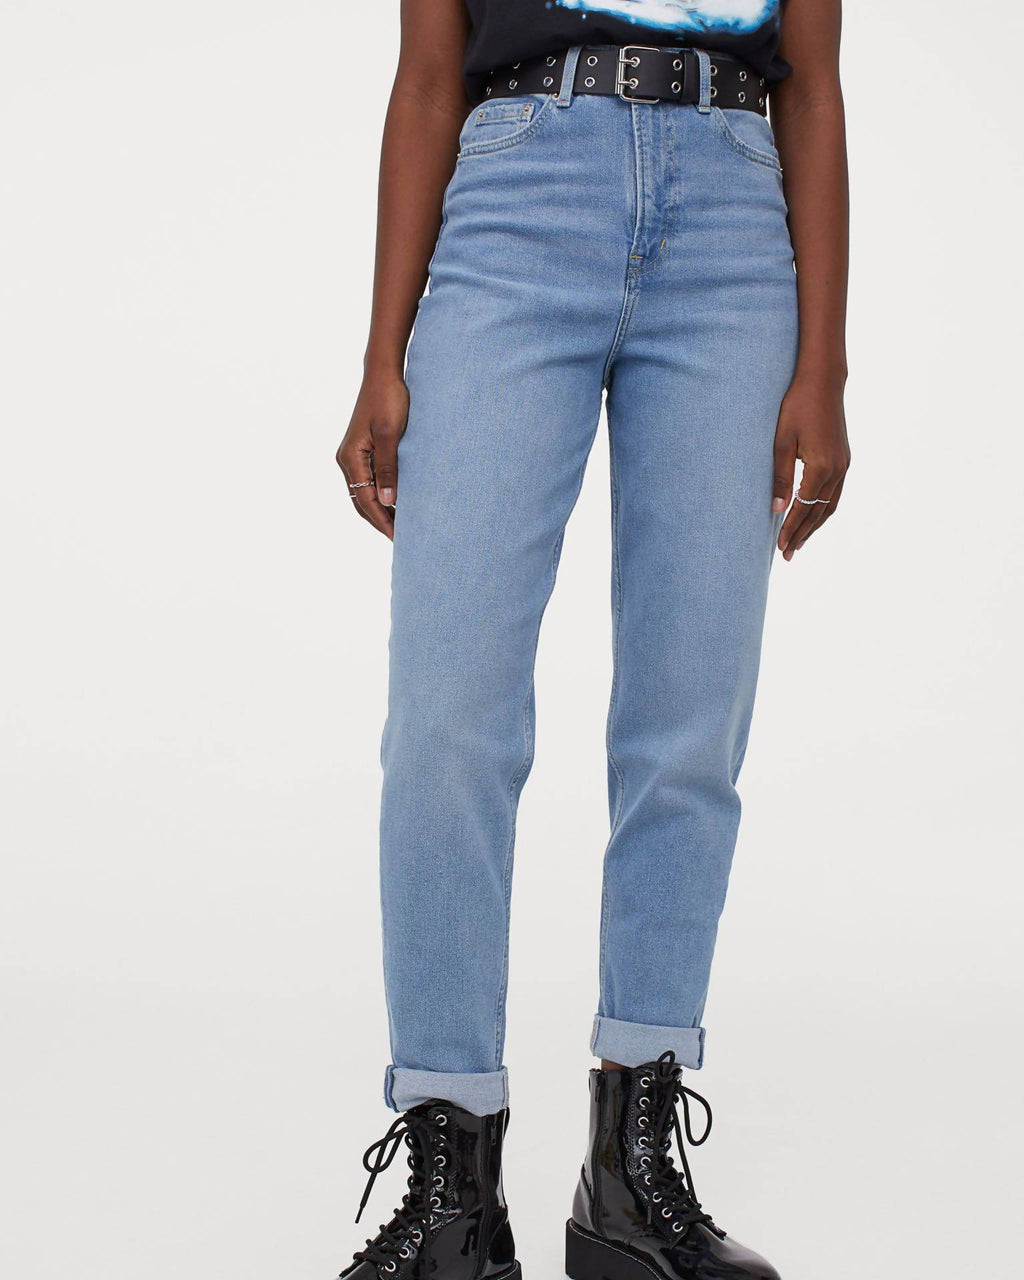 H&M DIVIDED denim blue jeans